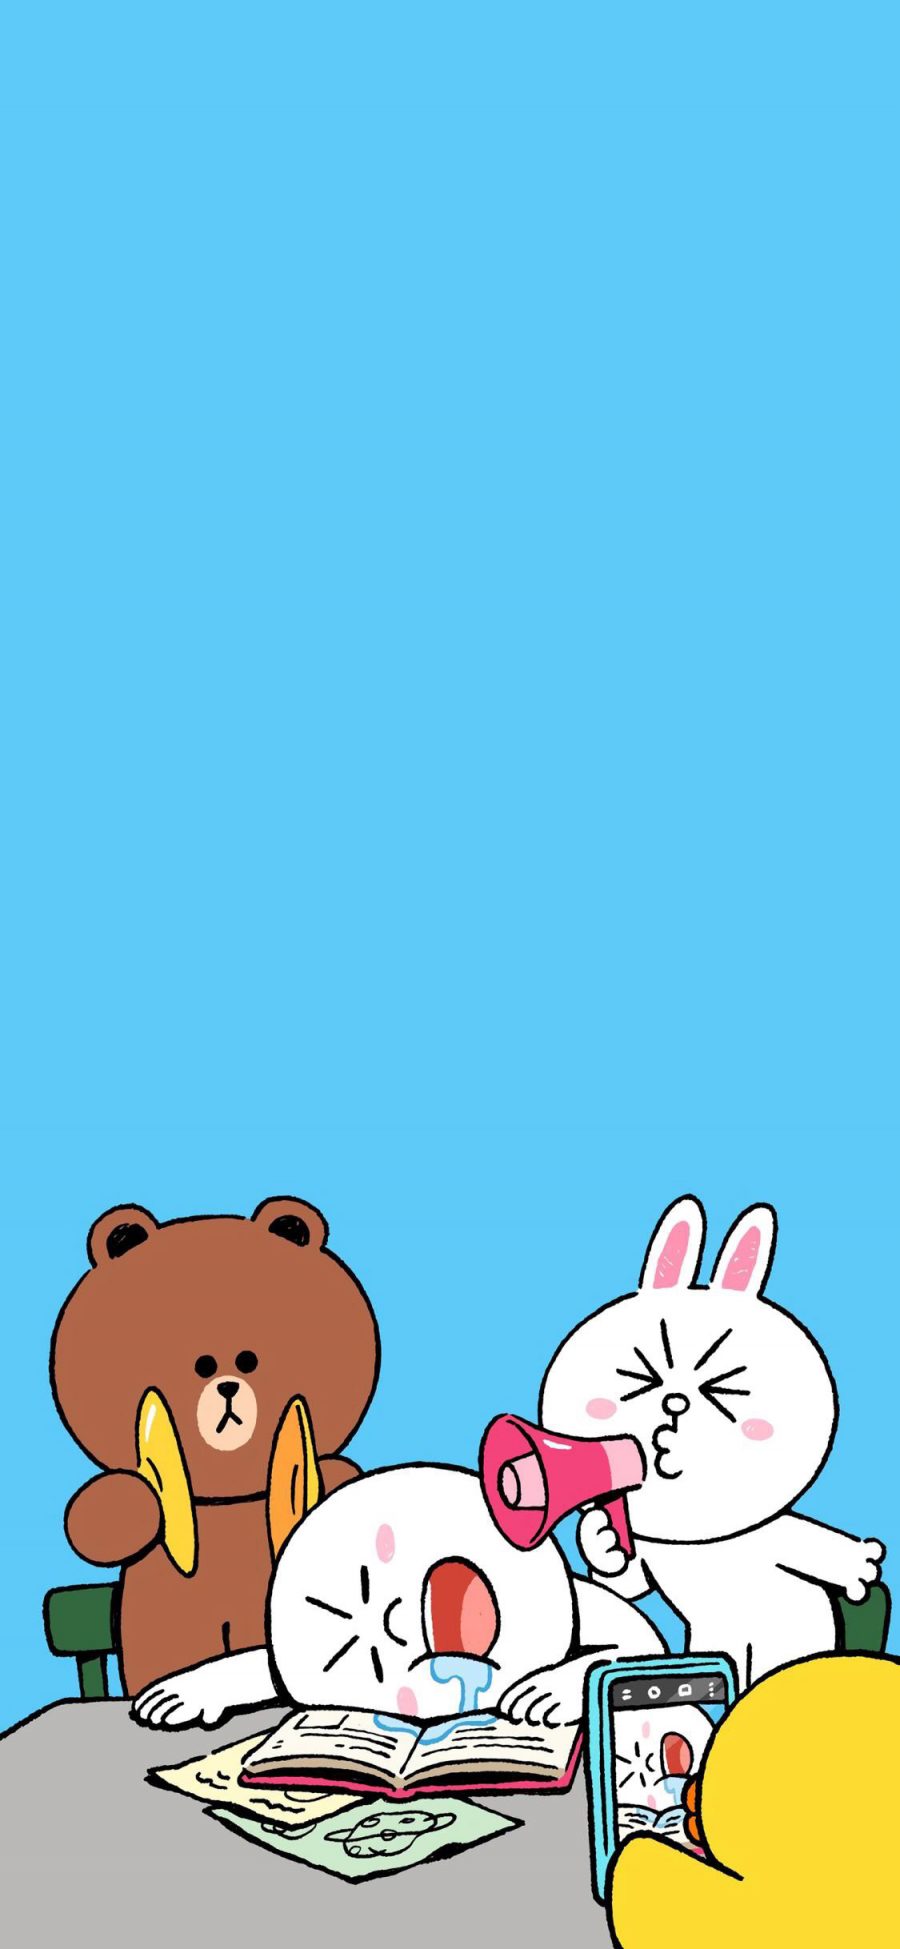 [2436×1125]linefriends 布朗熊 可妮兔 喇叭 蓝色 苹果手机动漫壁纸图片